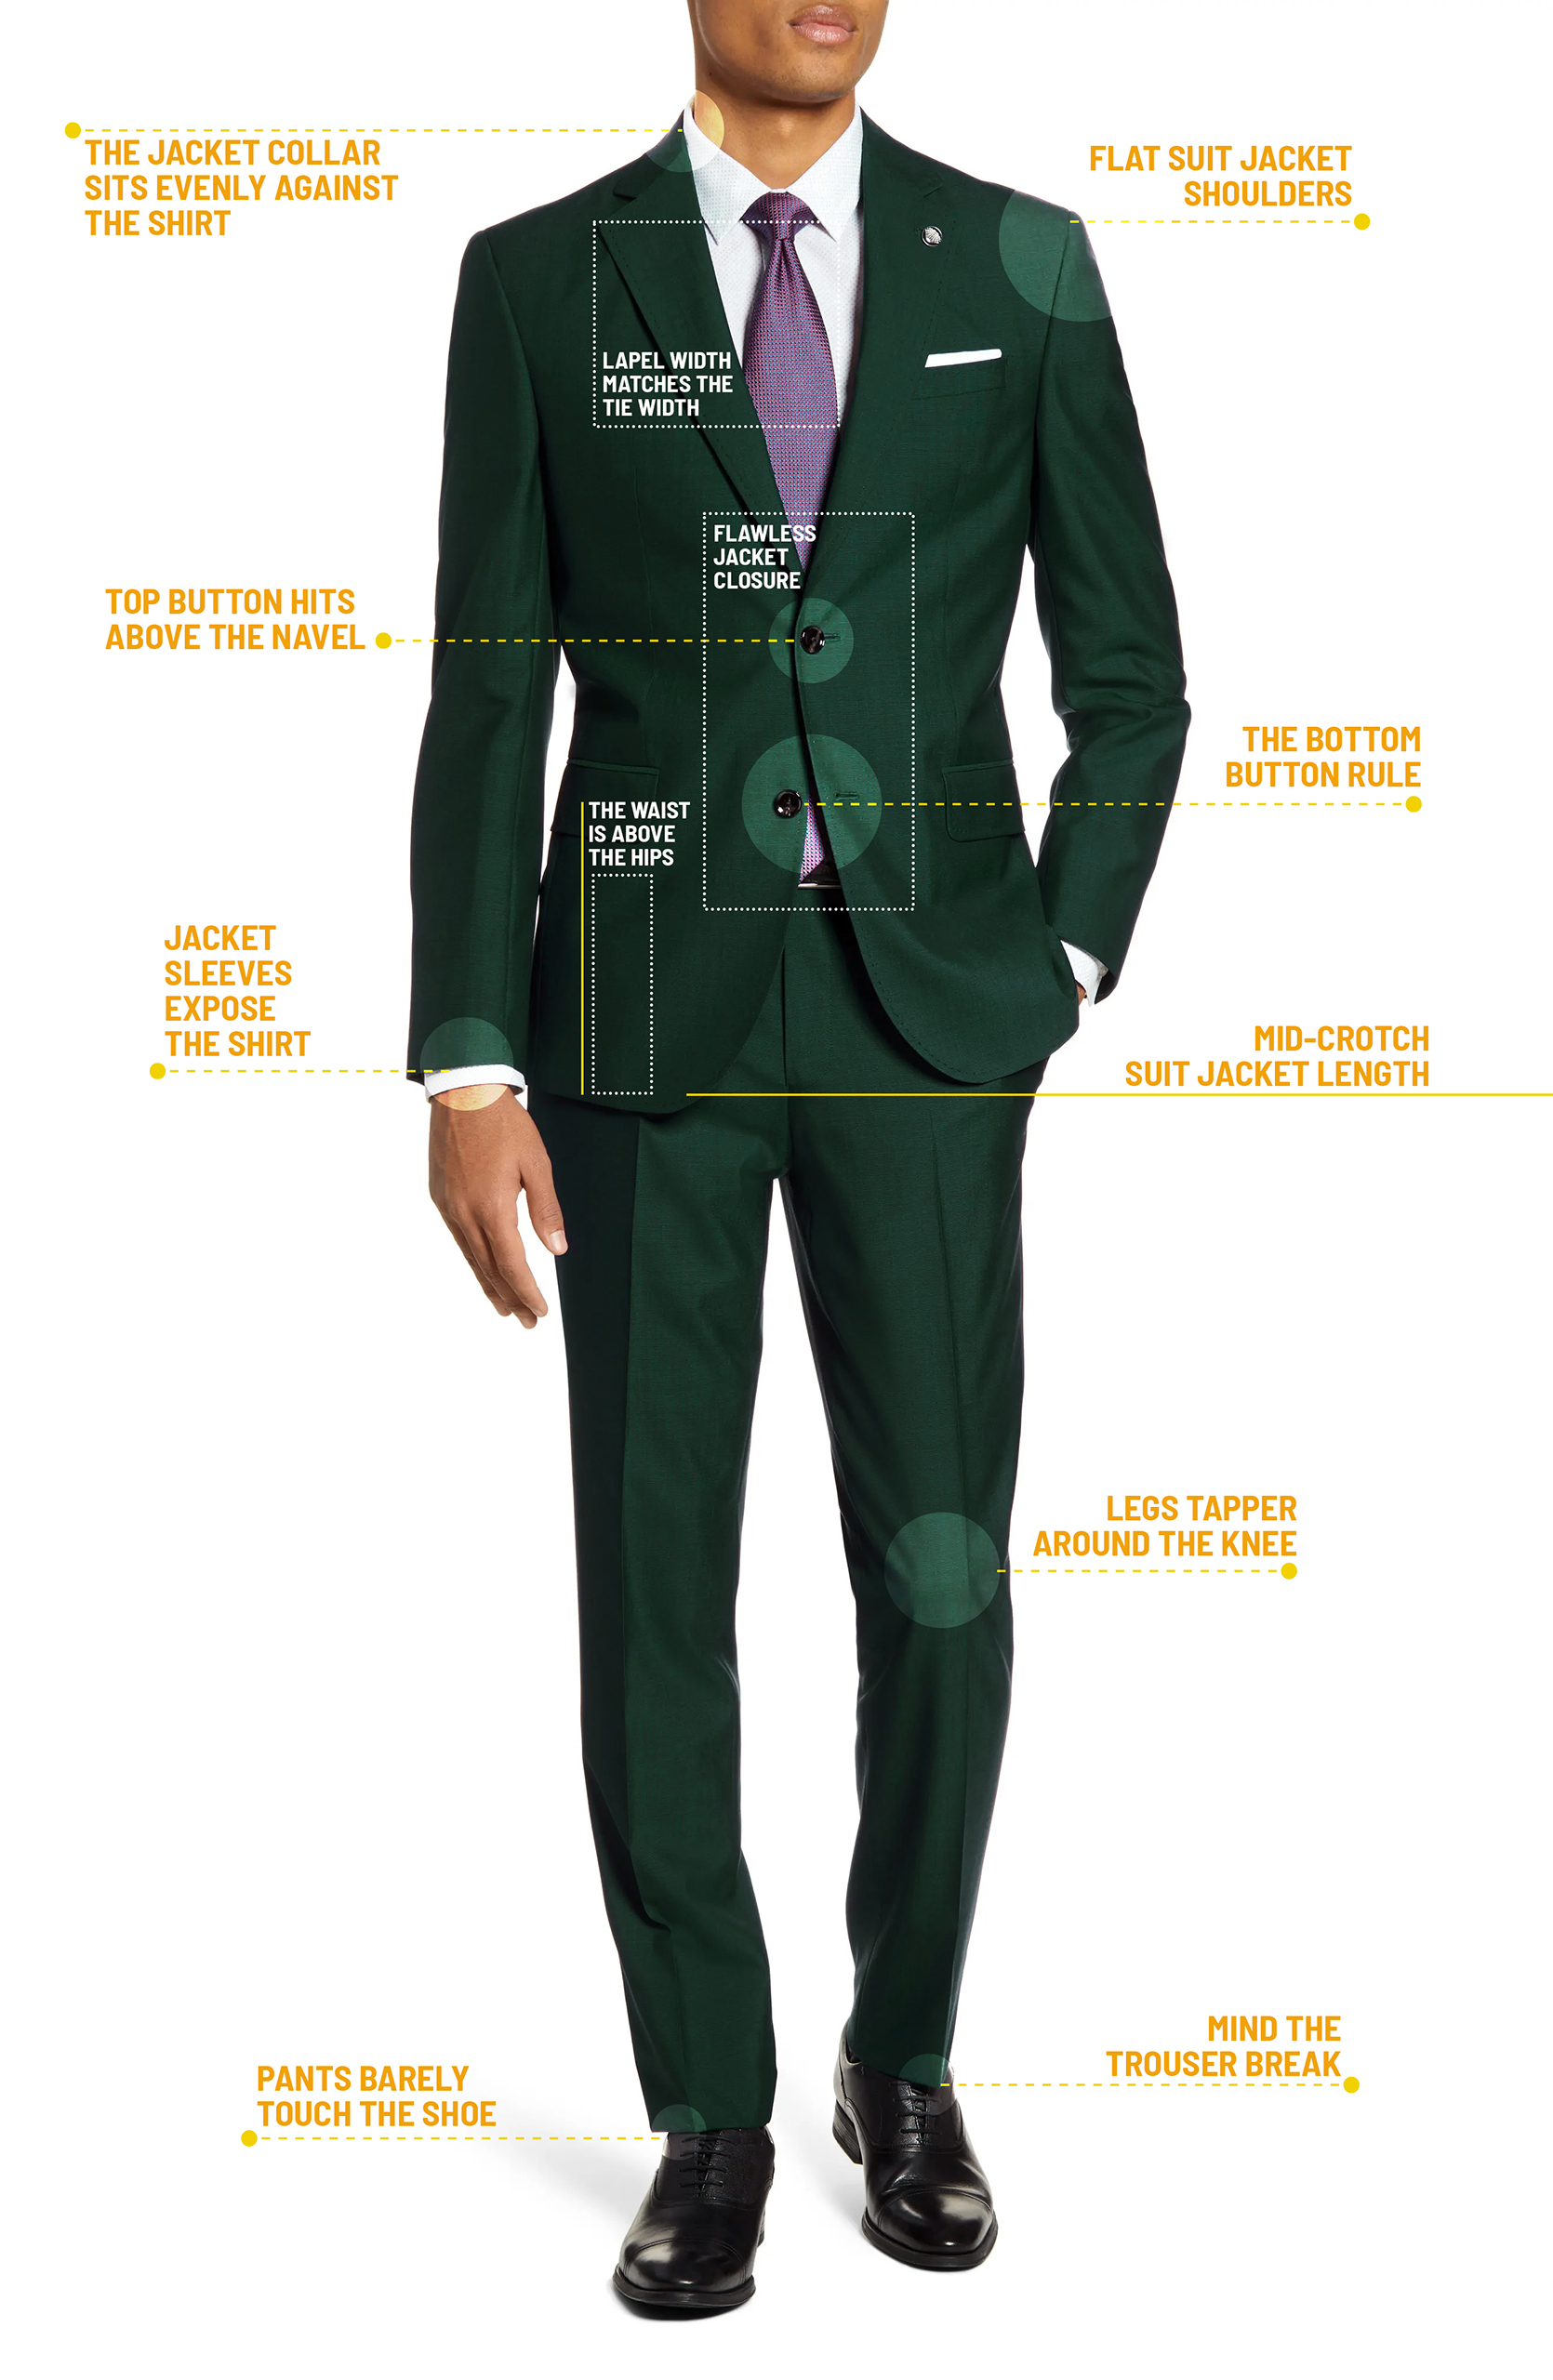 How should a green suit fit